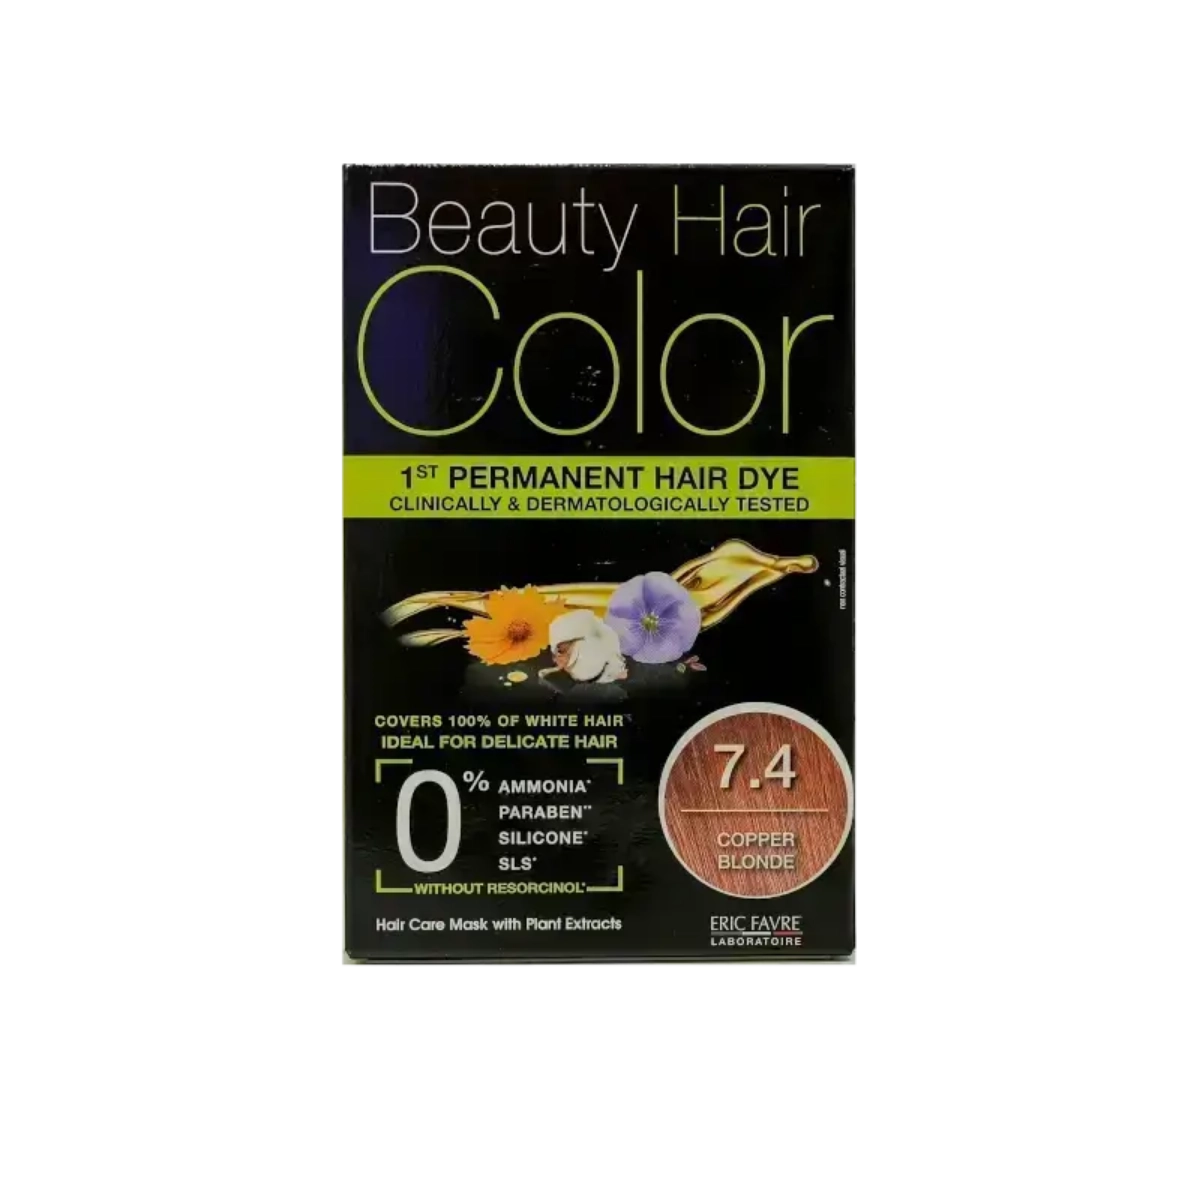 Eric Favre Beauty Hair Color 7.4 Copper Blonde